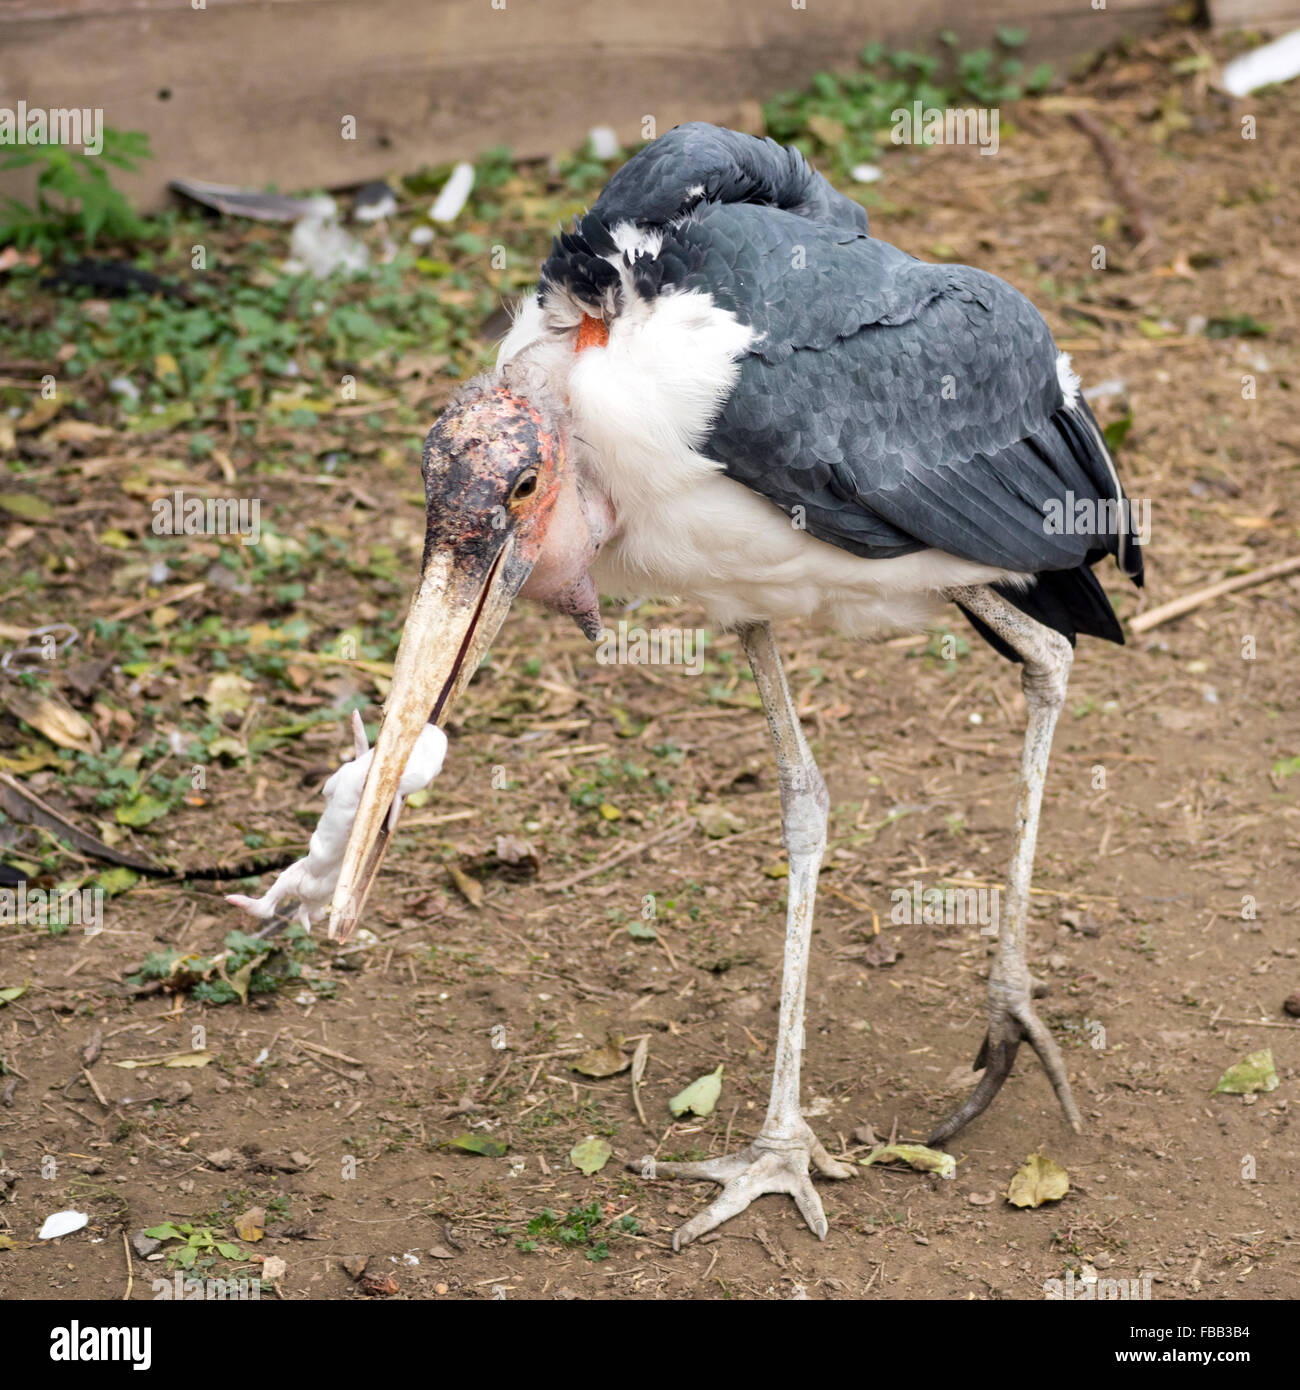 Marabou stork (Leptoptilos crumenifer) eating a baby bunny Stock Photo